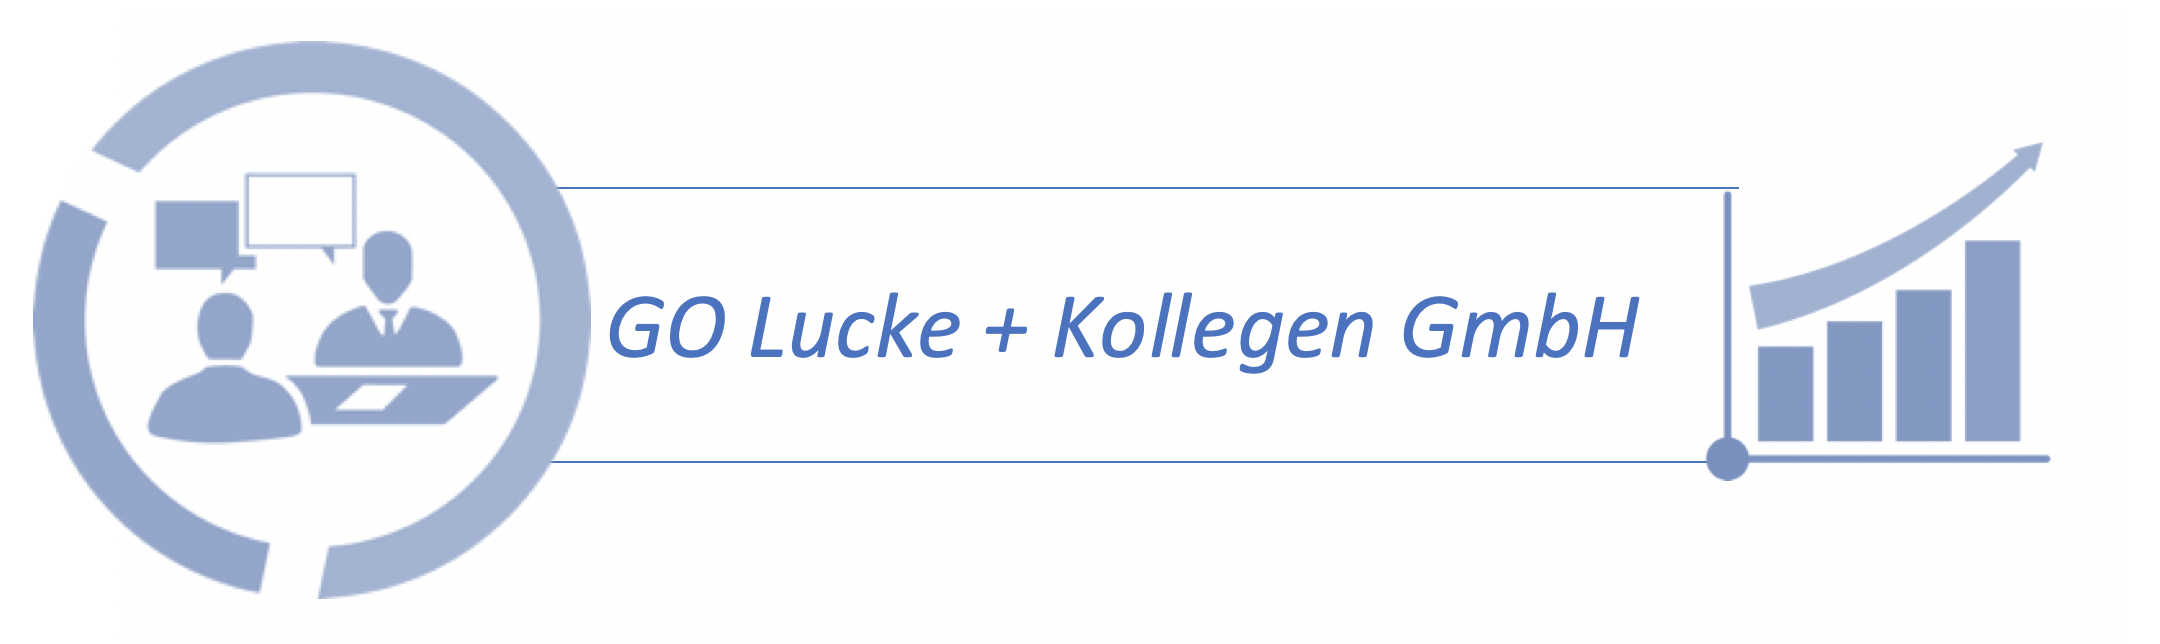 GO Lucke + Kollegen GmbH